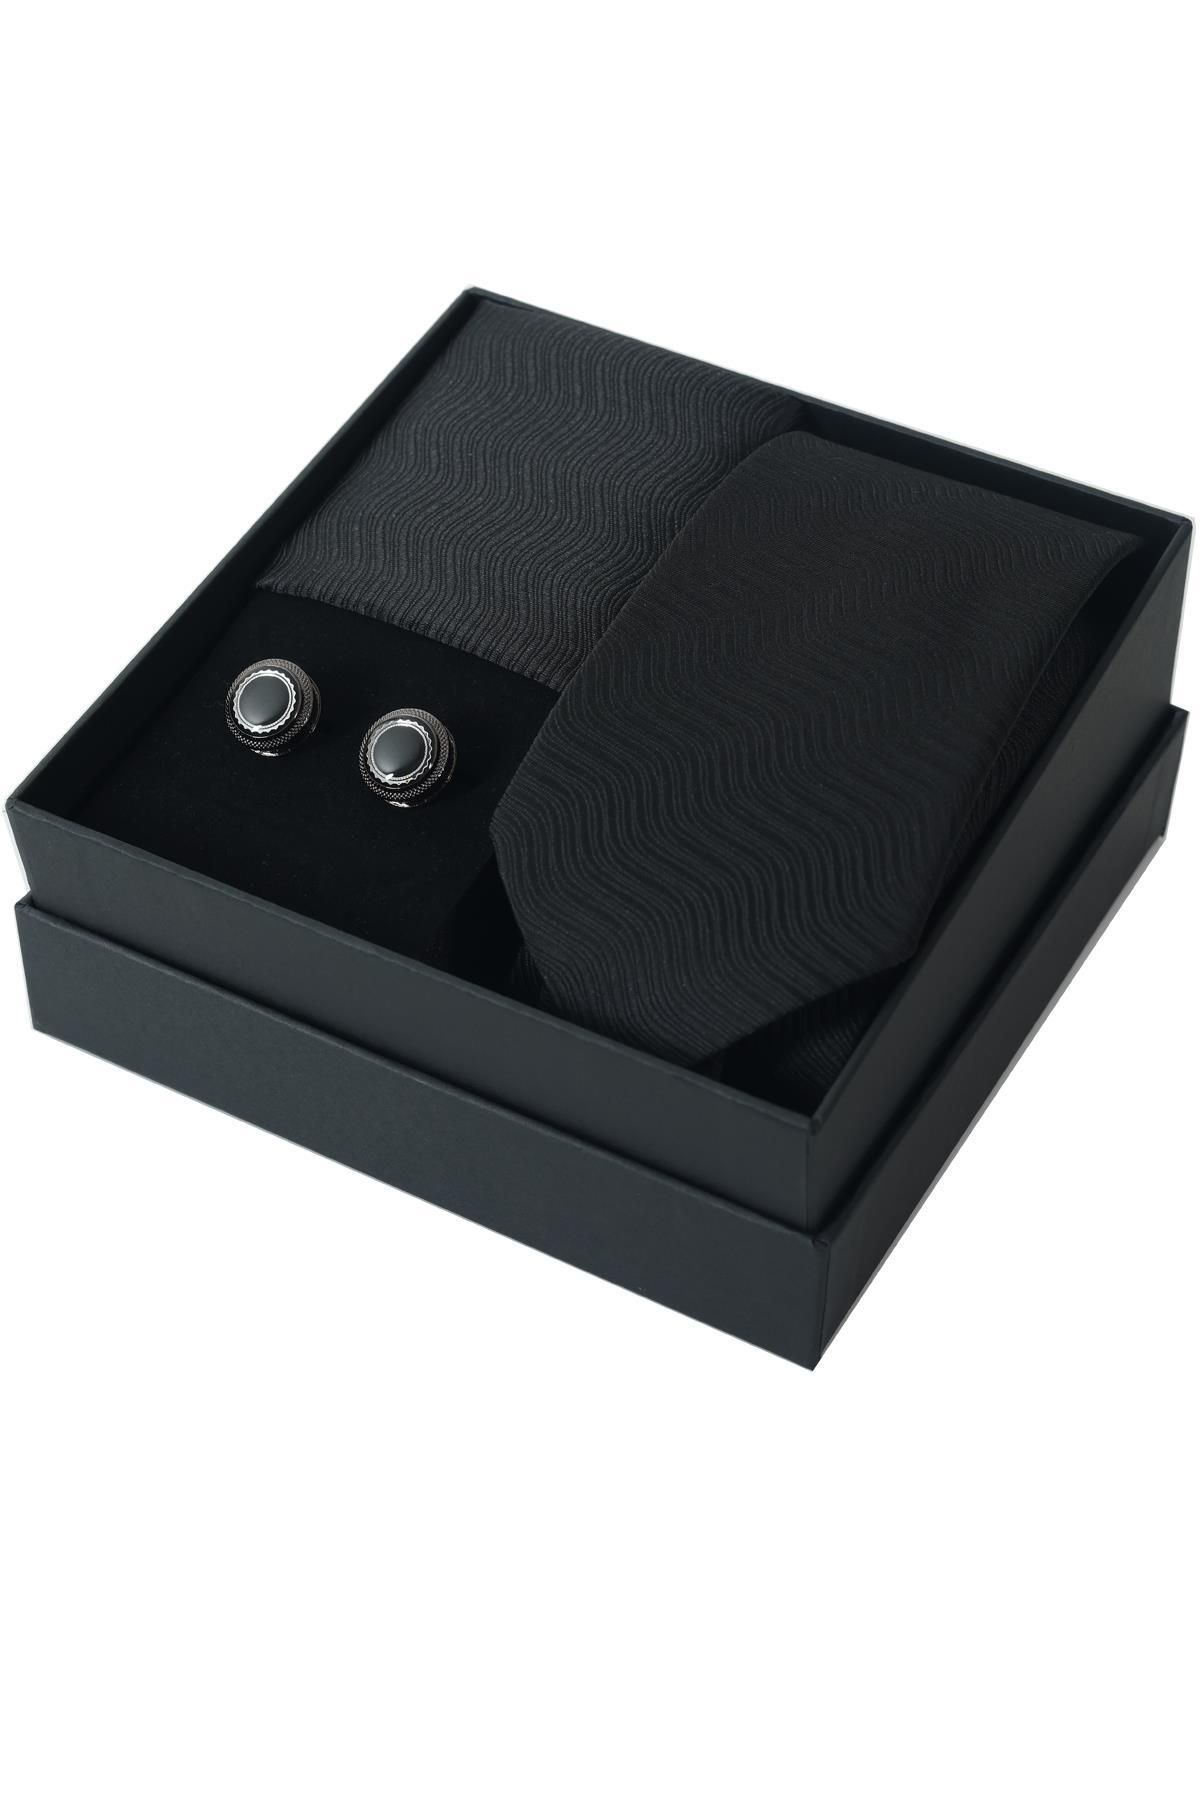 Esgue Füme-Siyah Kol Düğmesi Hand Made Siyah Desenli 7.5 cm Kravat Mendil Kutulu Hediye Seti